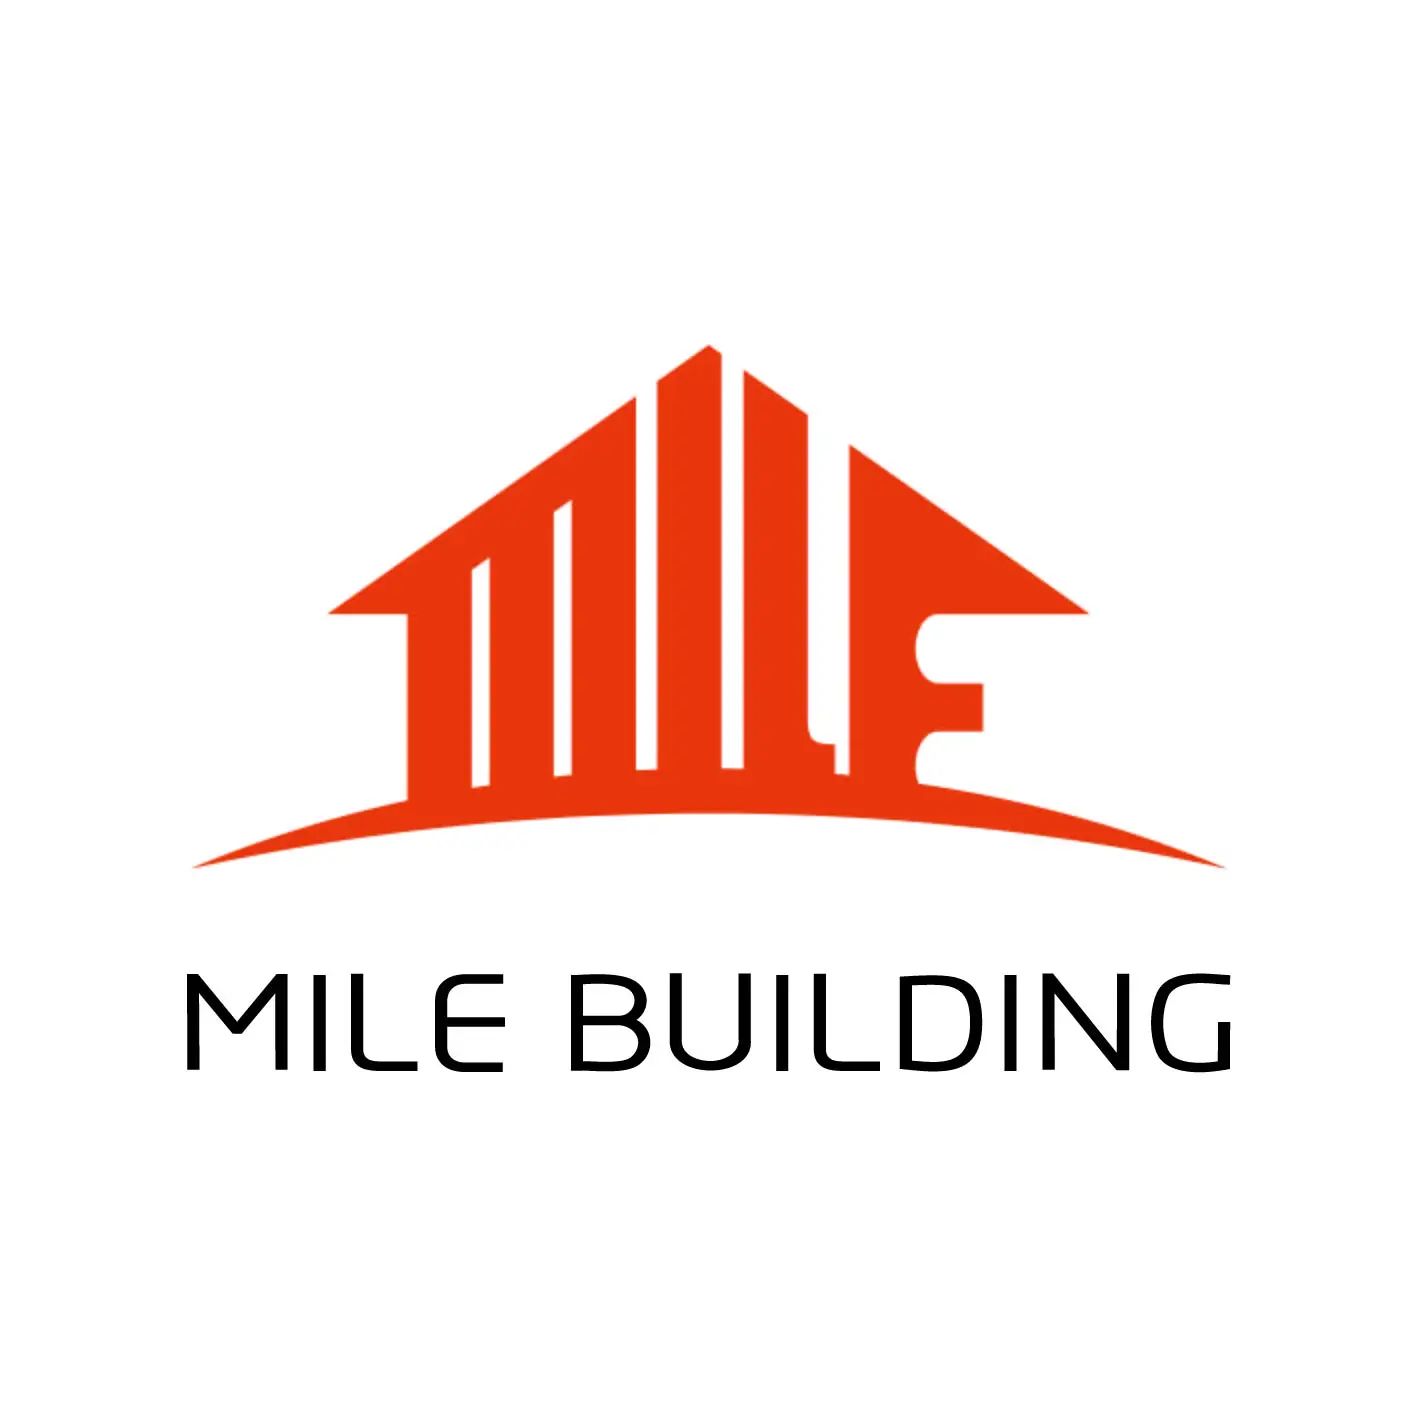 Build mile. Shandong Huamei building materials co.,Ltd..